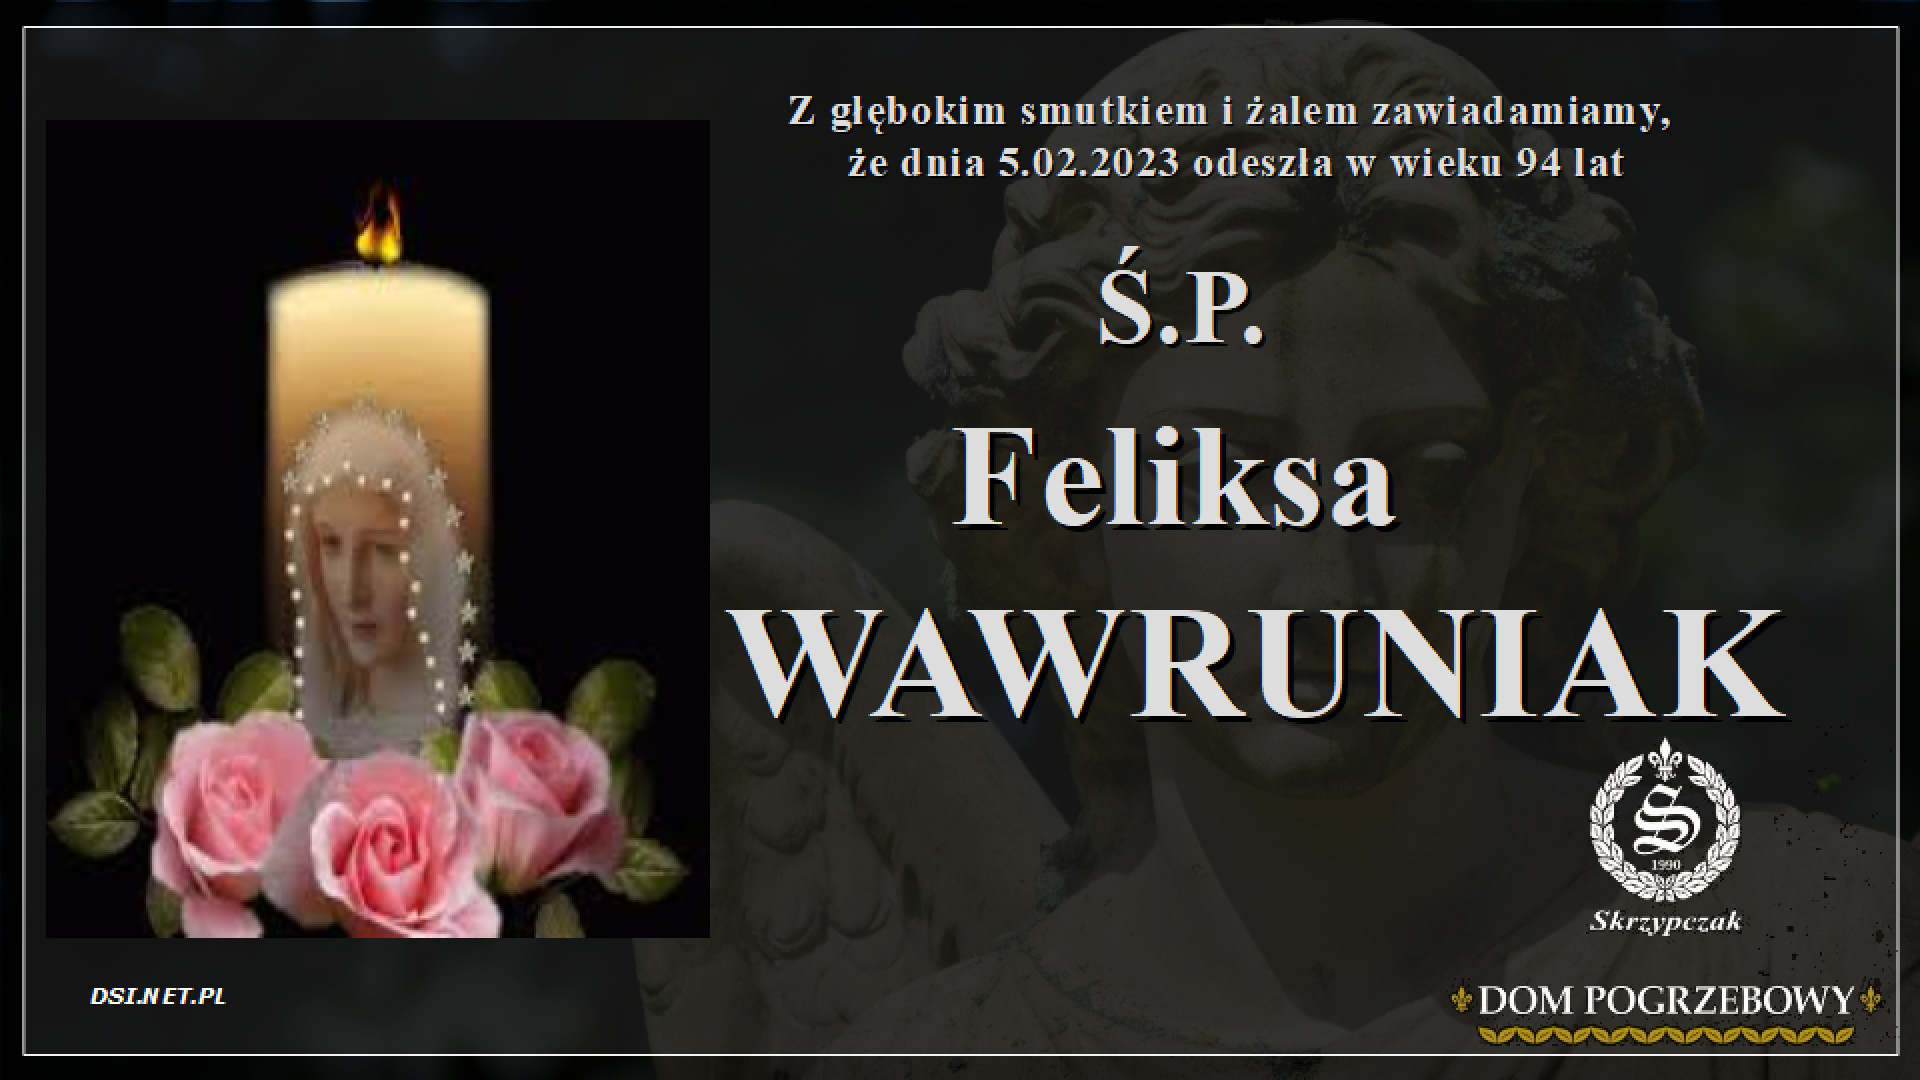 Ś.P. Feliksa Wawruniak